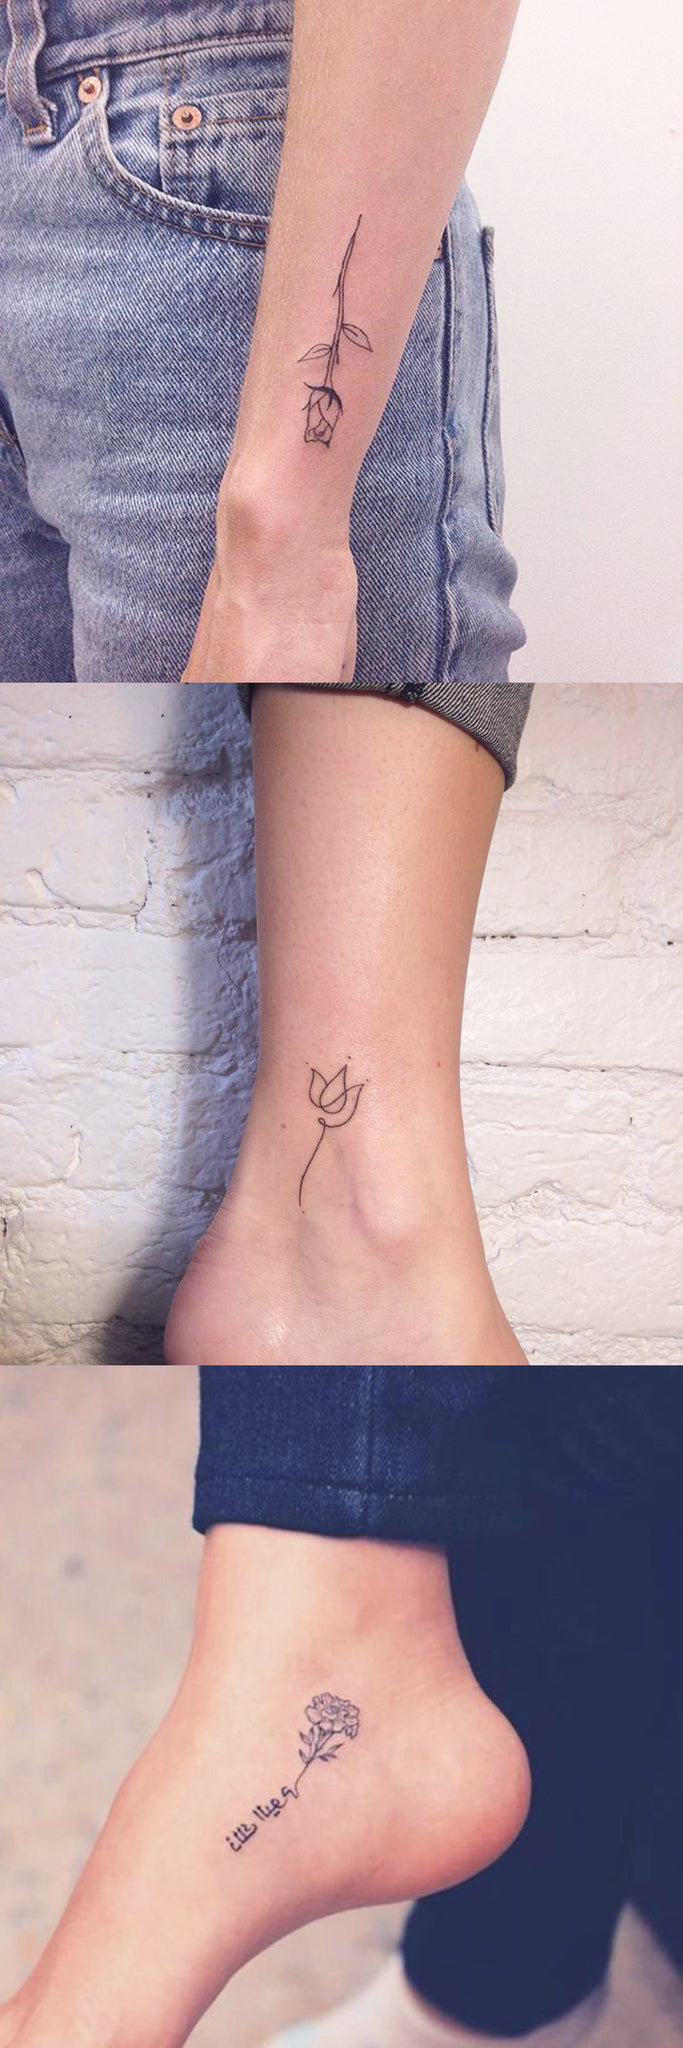 Minimalistic and Simple Rose Ankle Foot Tattoo Ideas in Black Henna - Cute Wrist Flower Tatt - at MyBodiArt.com 